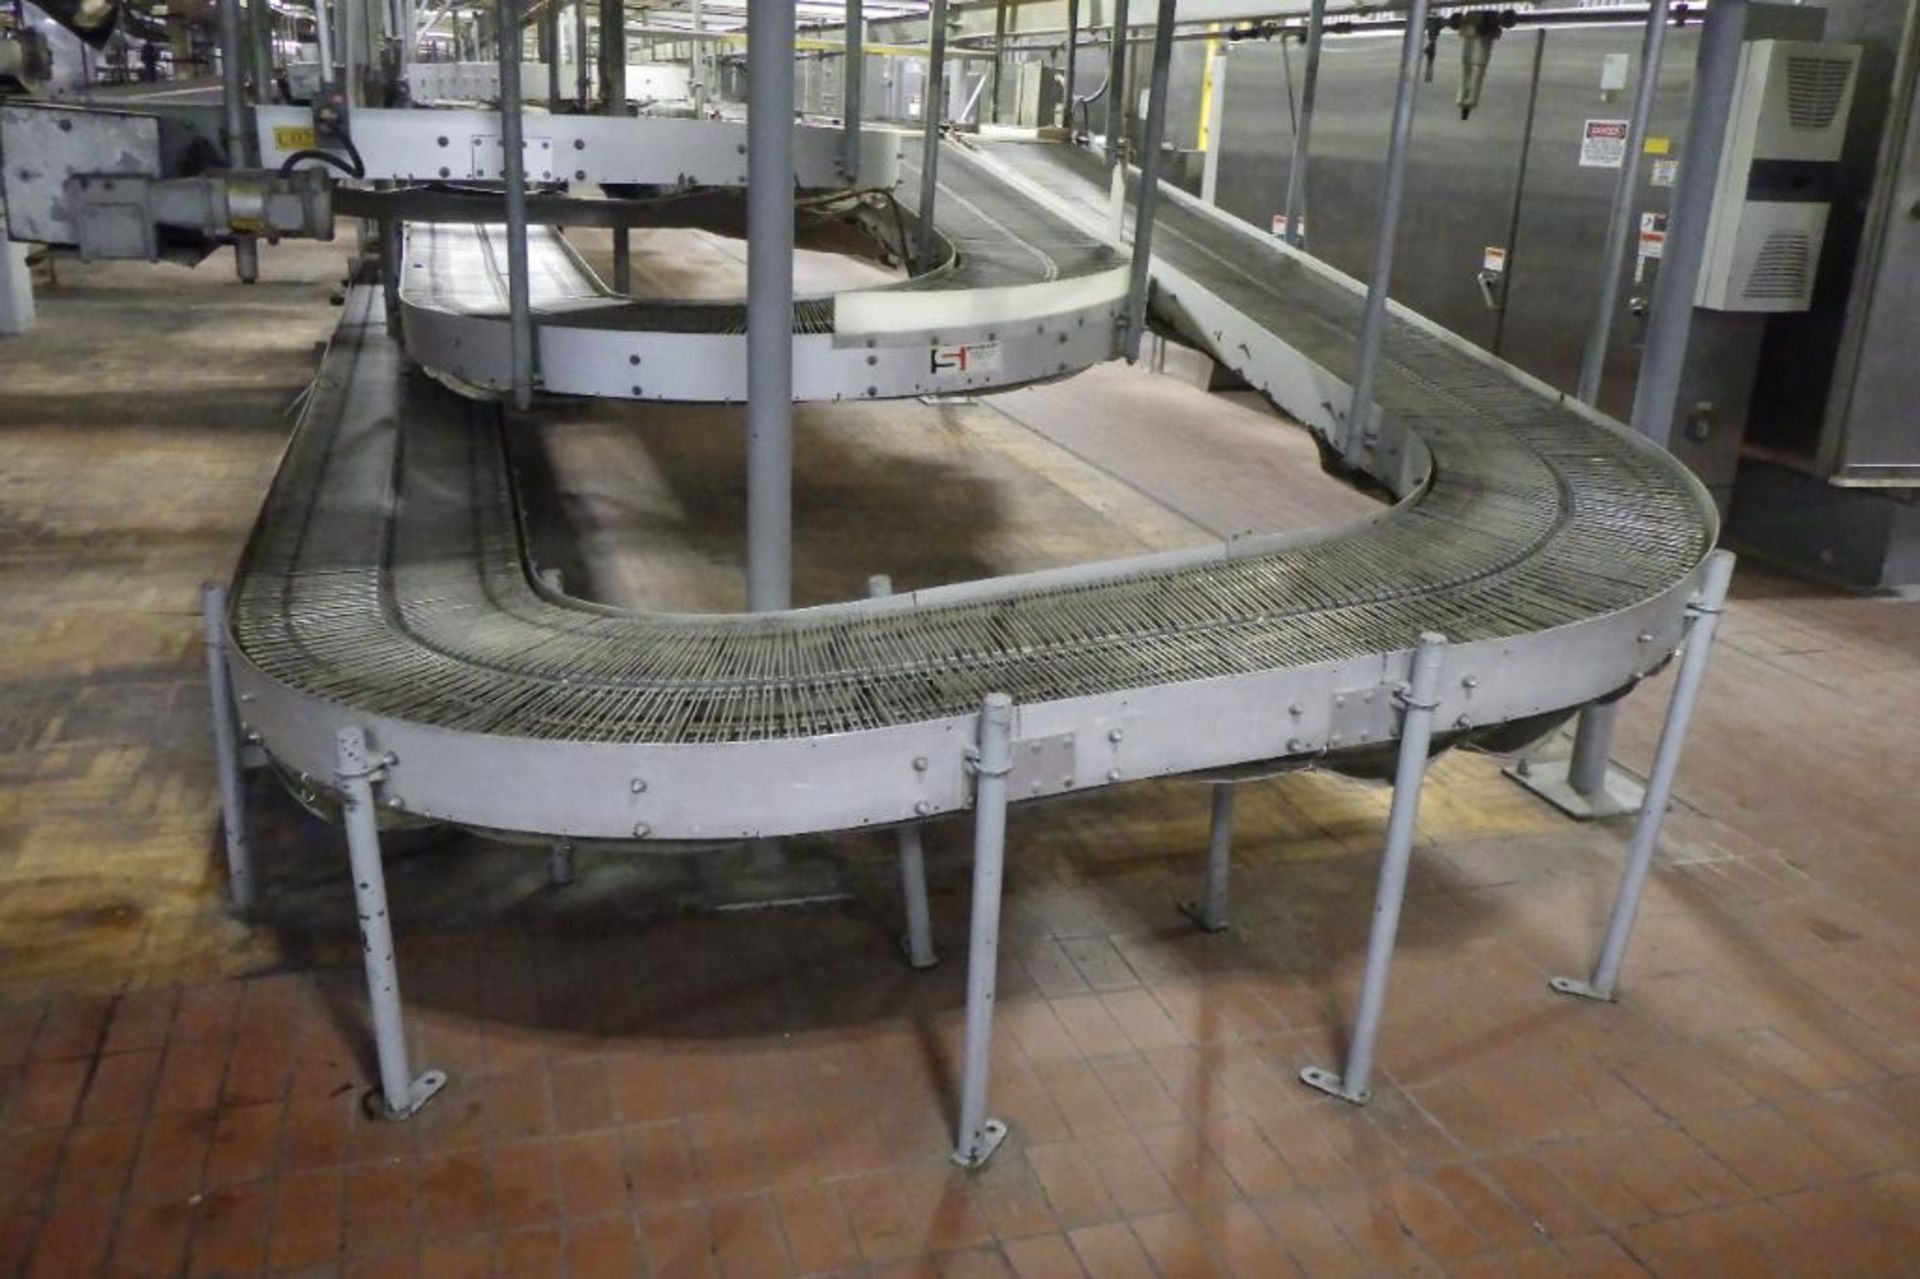 Stewart systems 180 degree conveyor